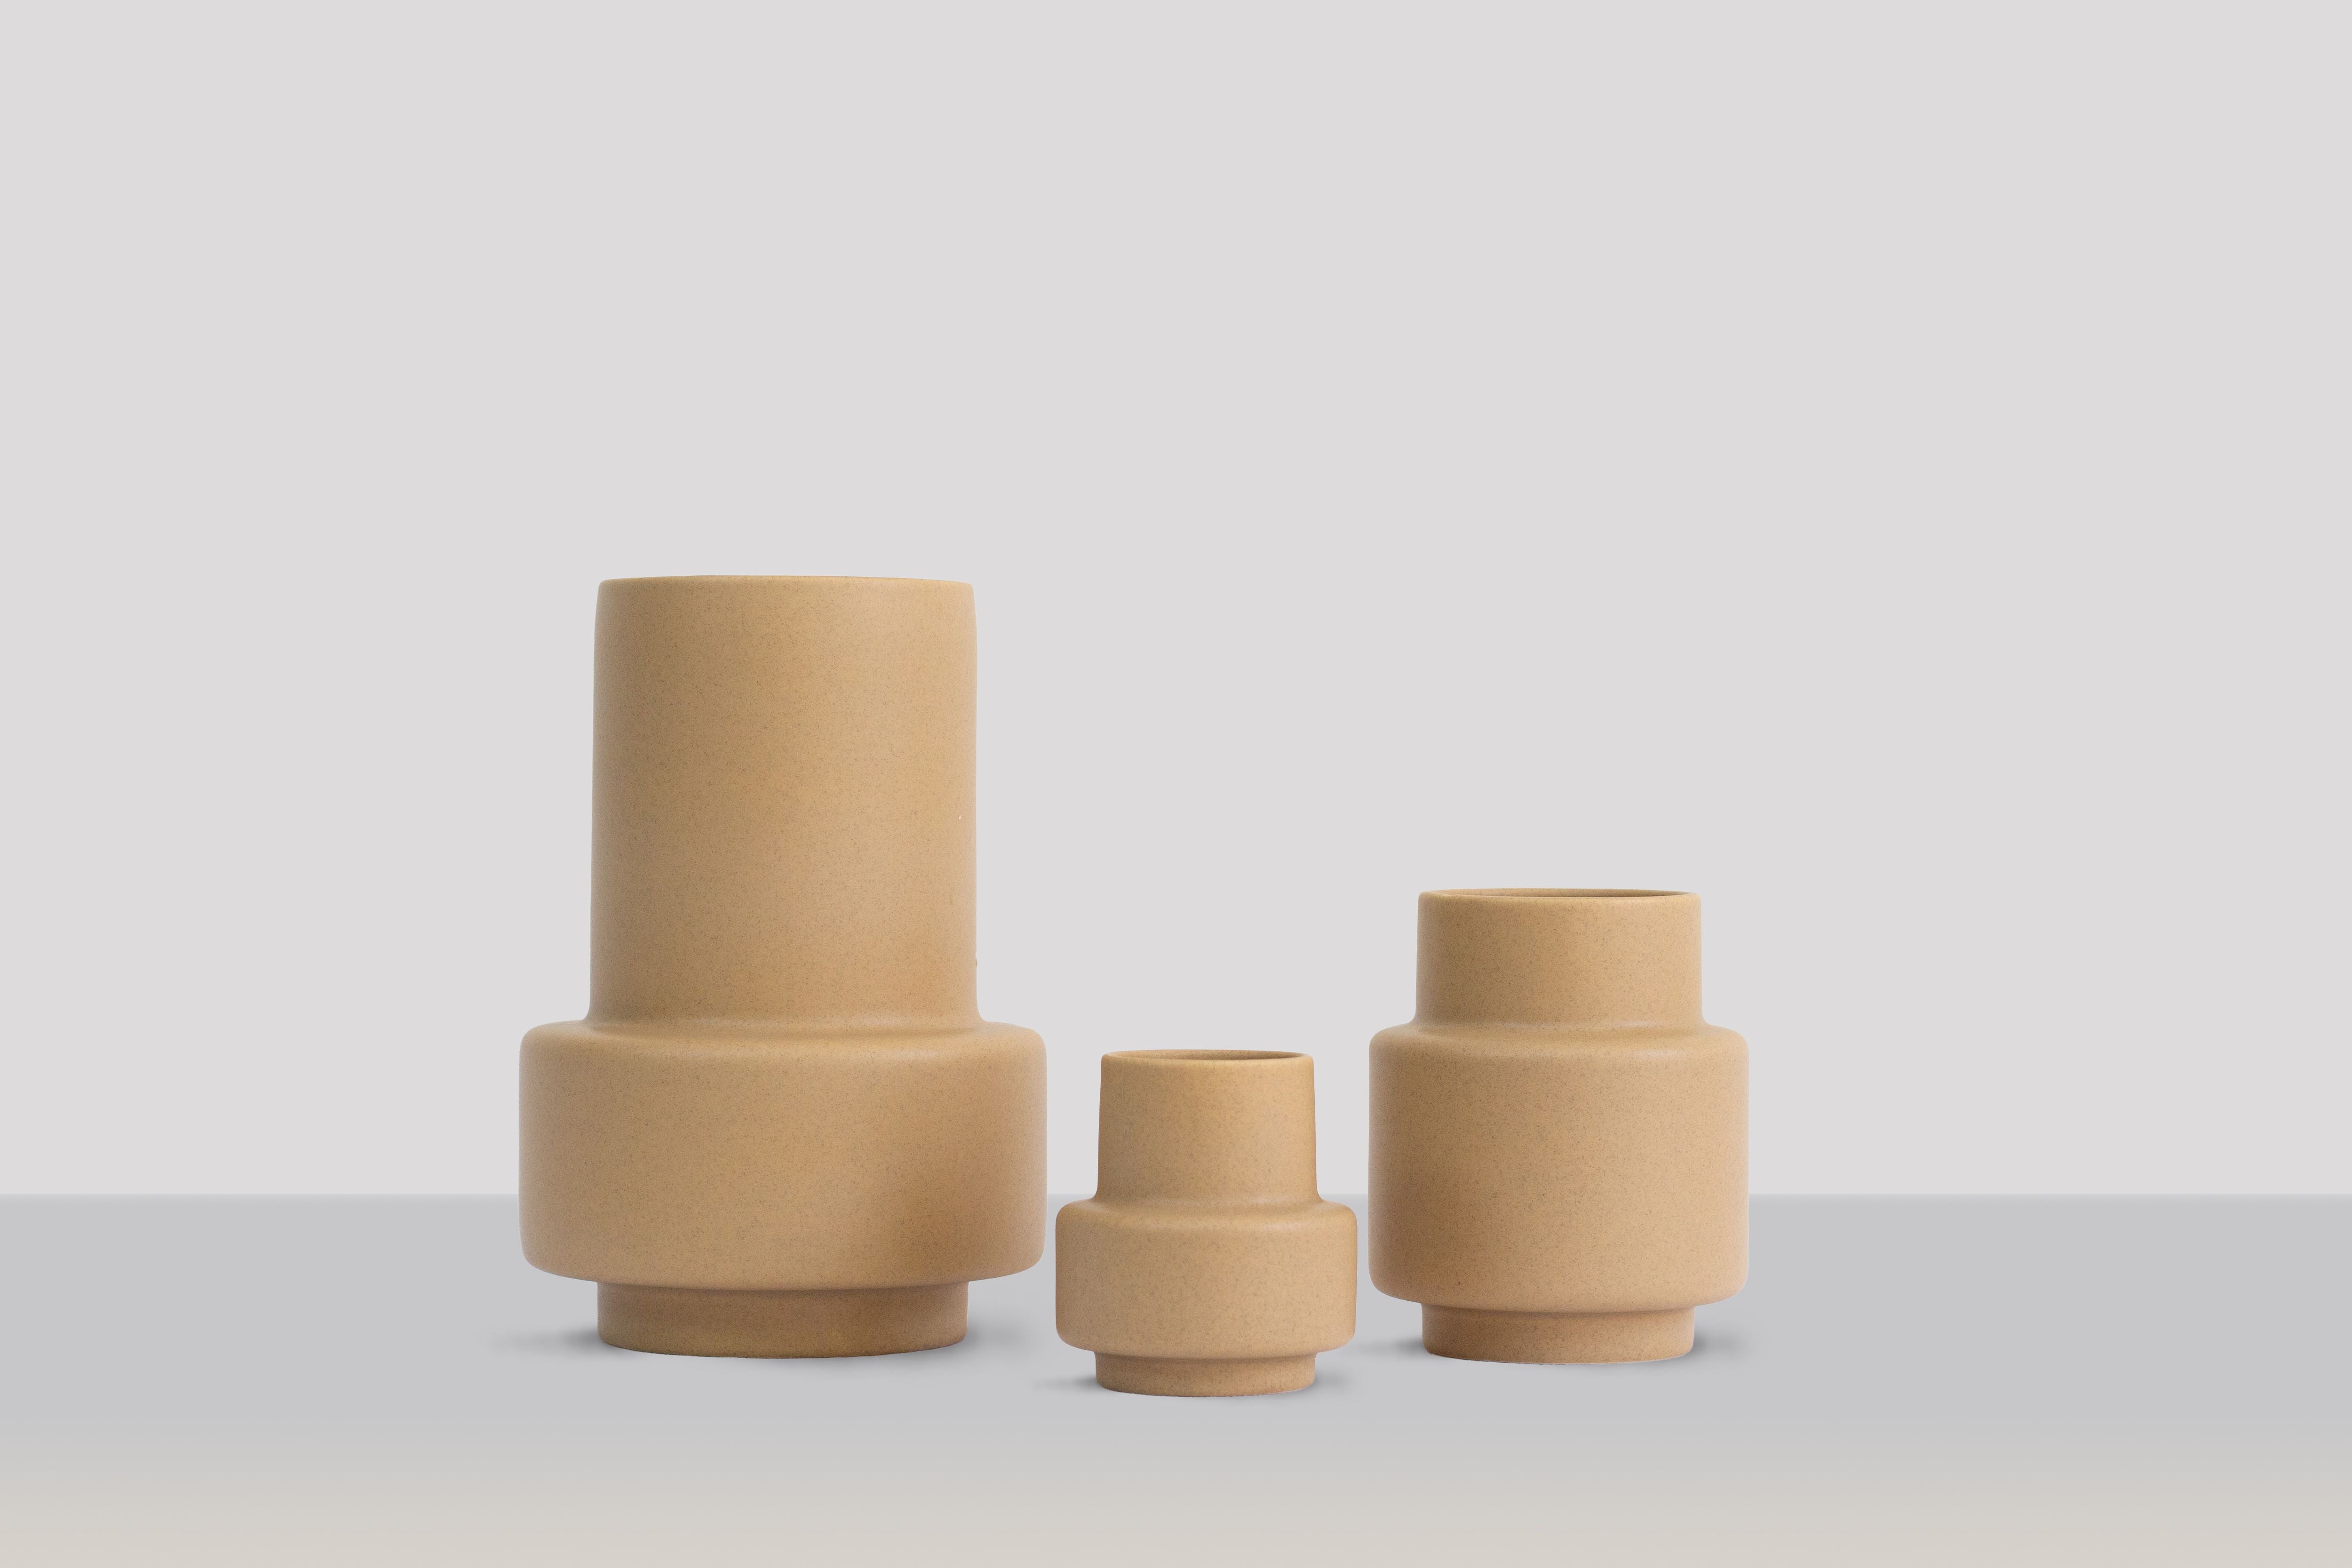 Ro Collection Hurricane Ceramic Vase Medium, Soft Ochre